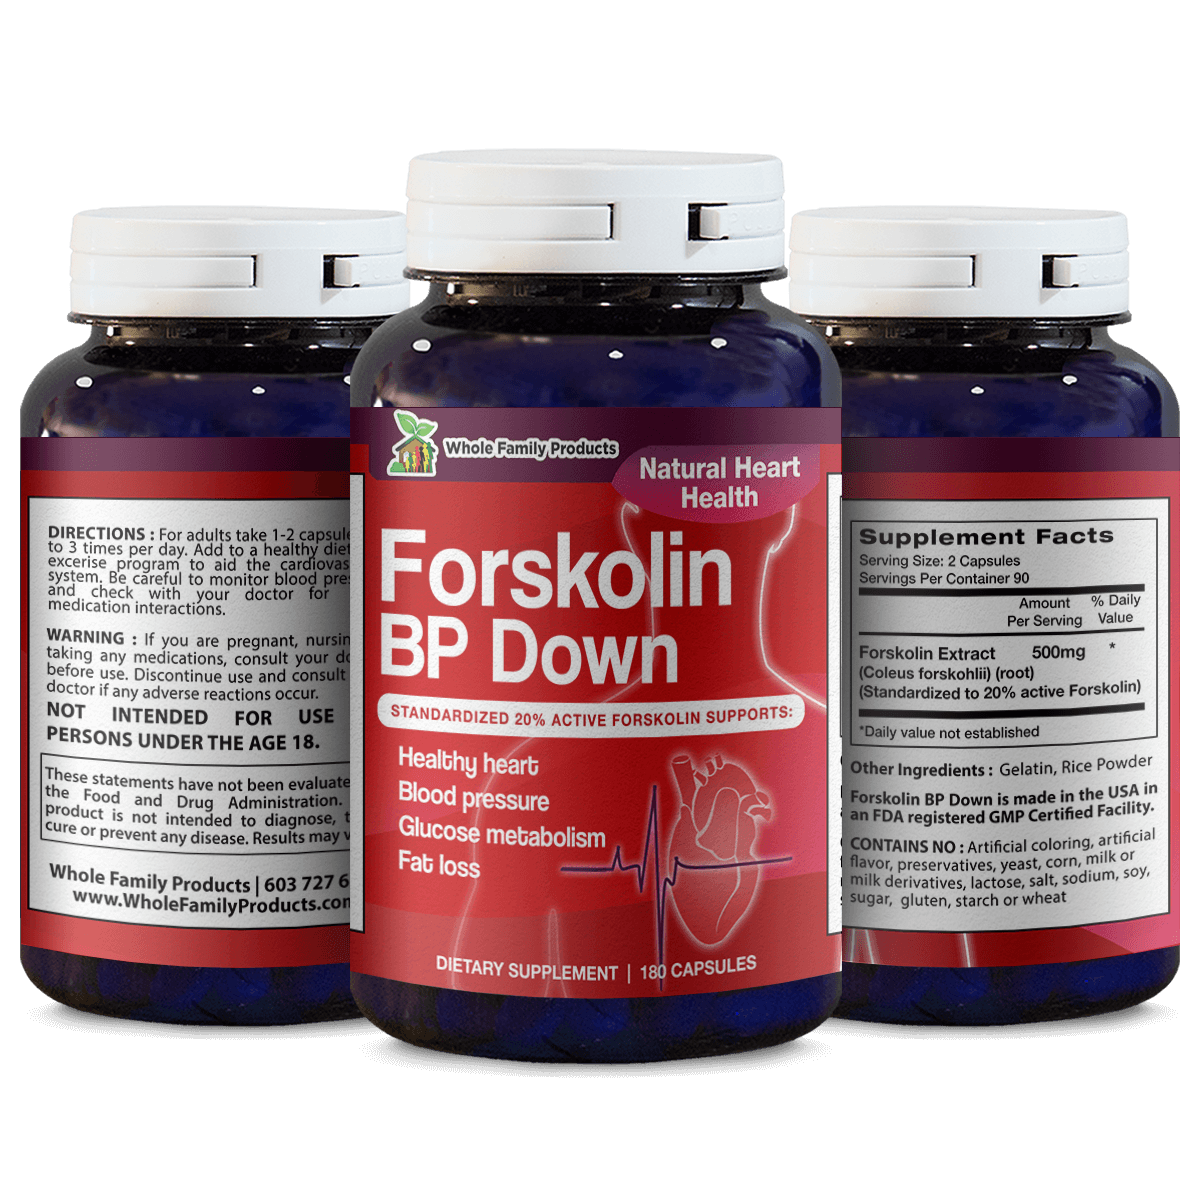 Forskolin BP Down 180 Capsules Natural Heart Health